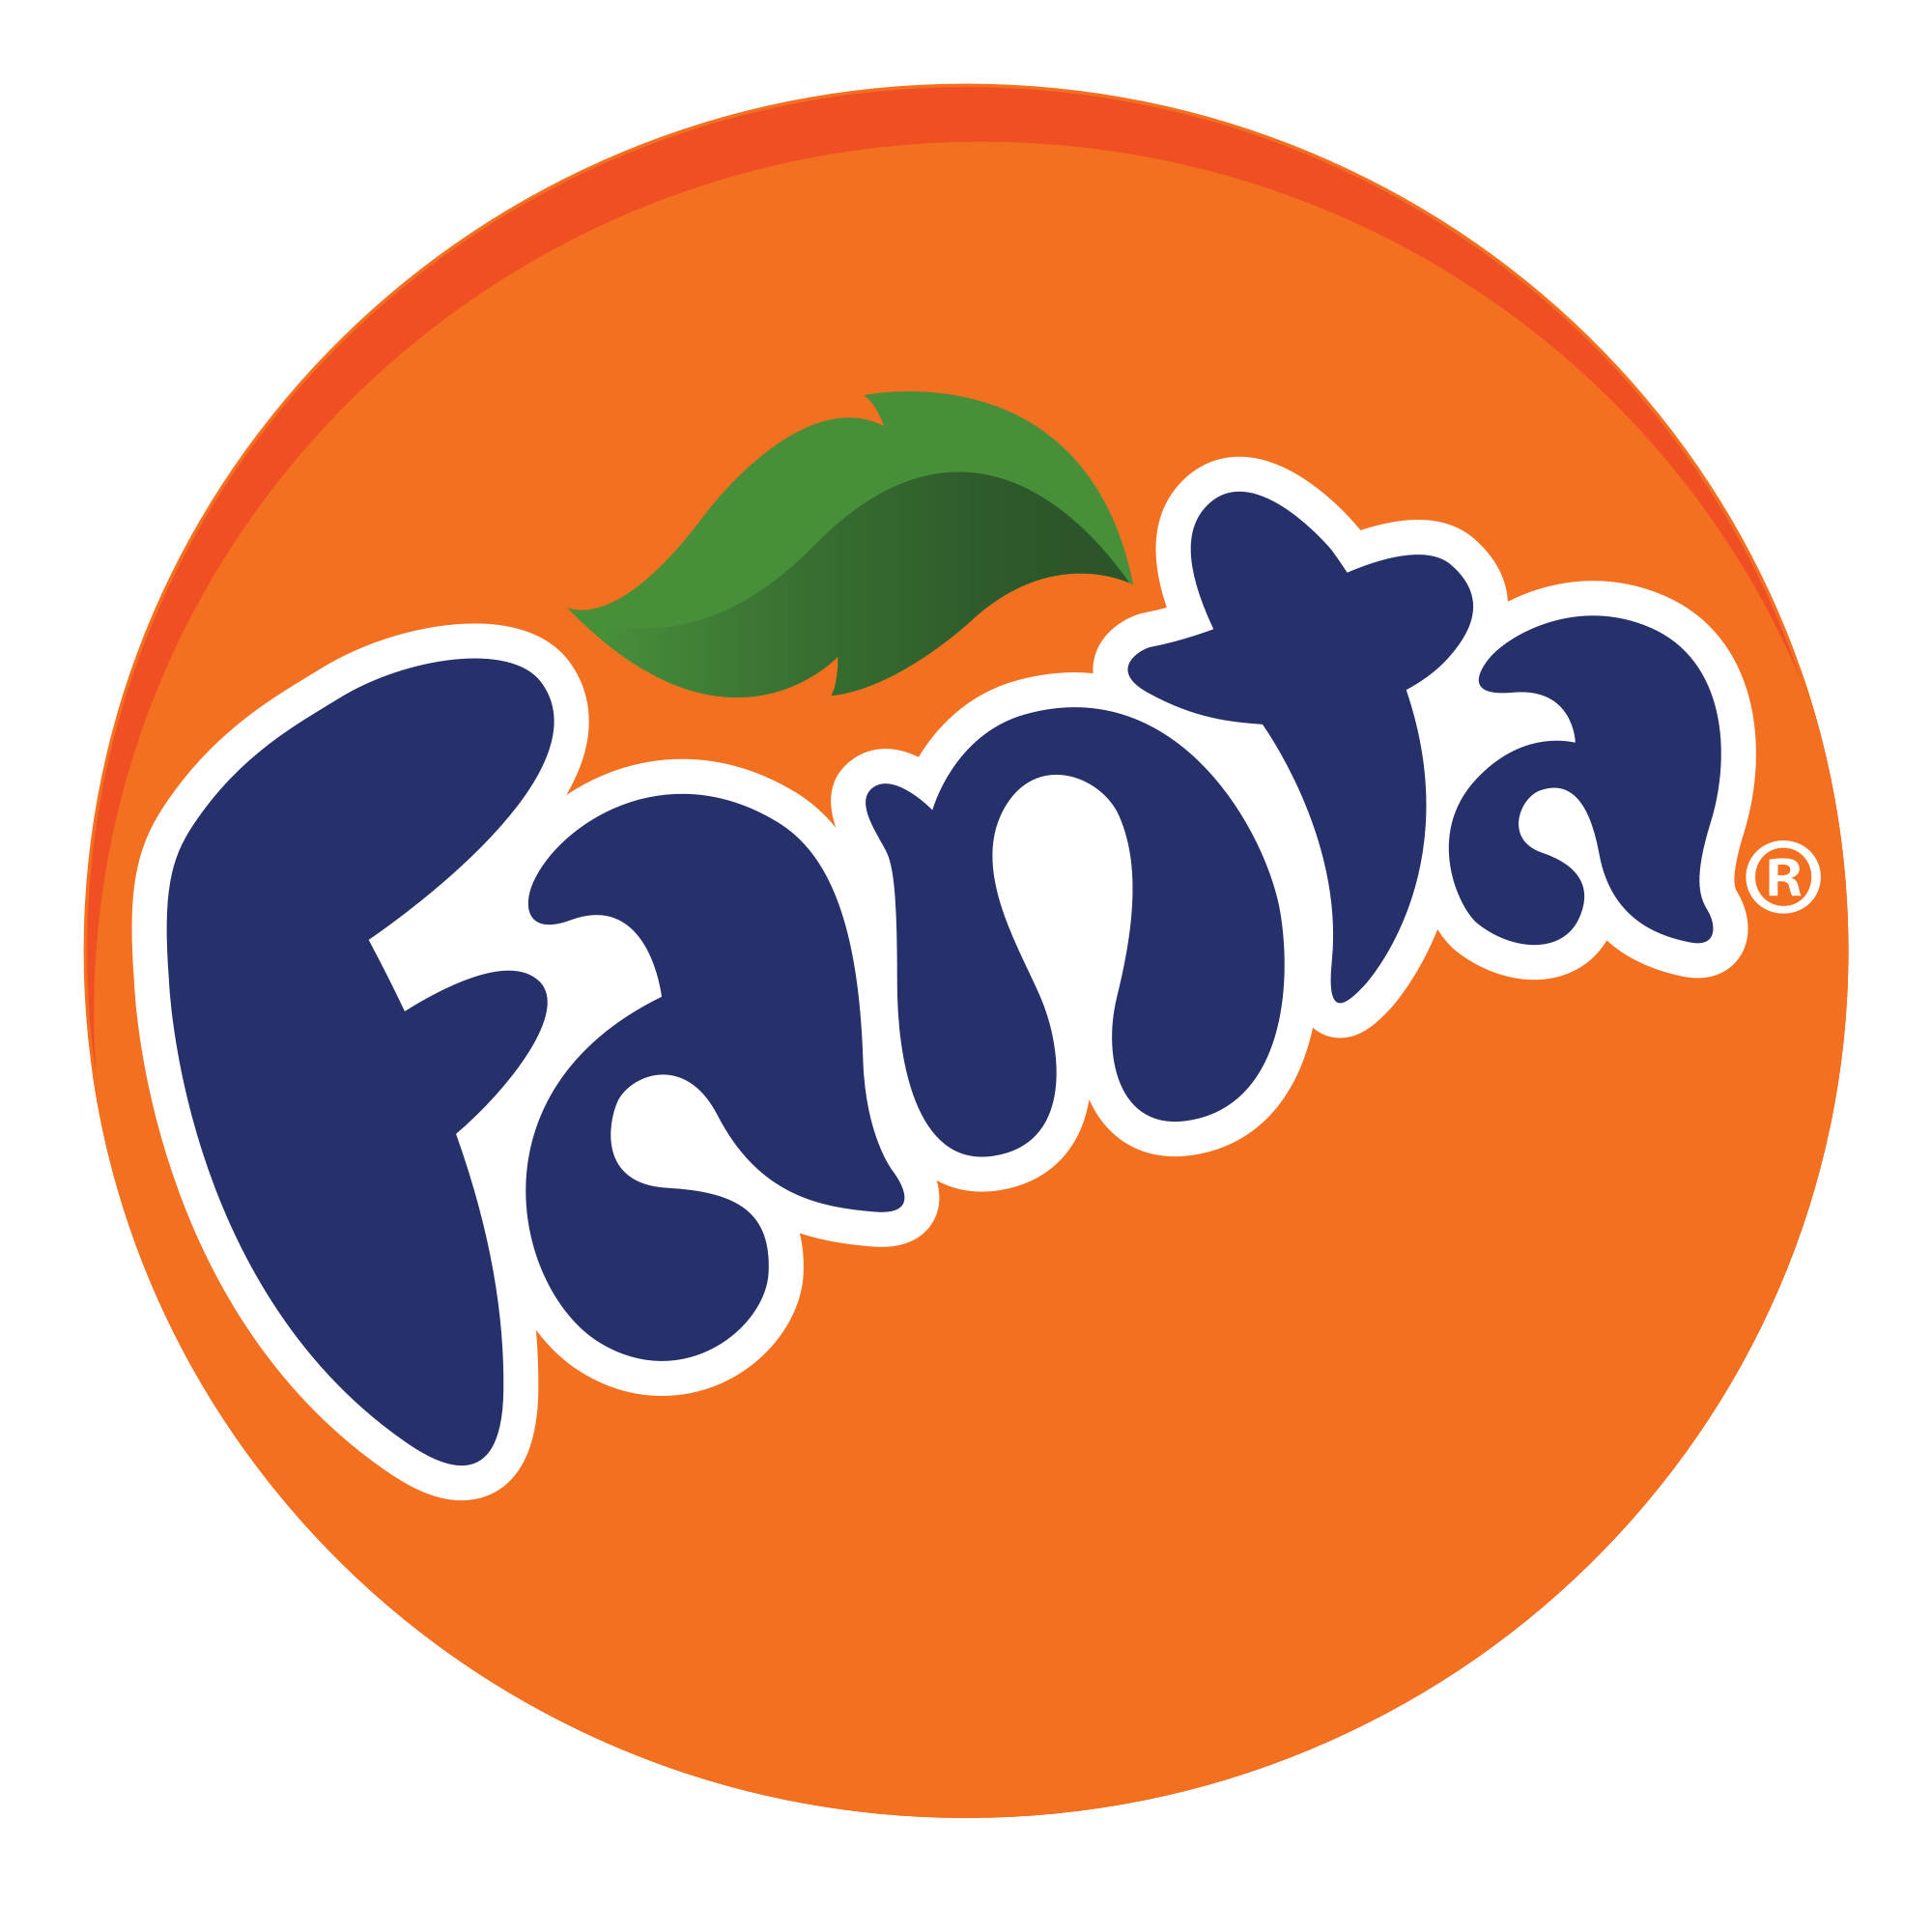 Fanta-Logo